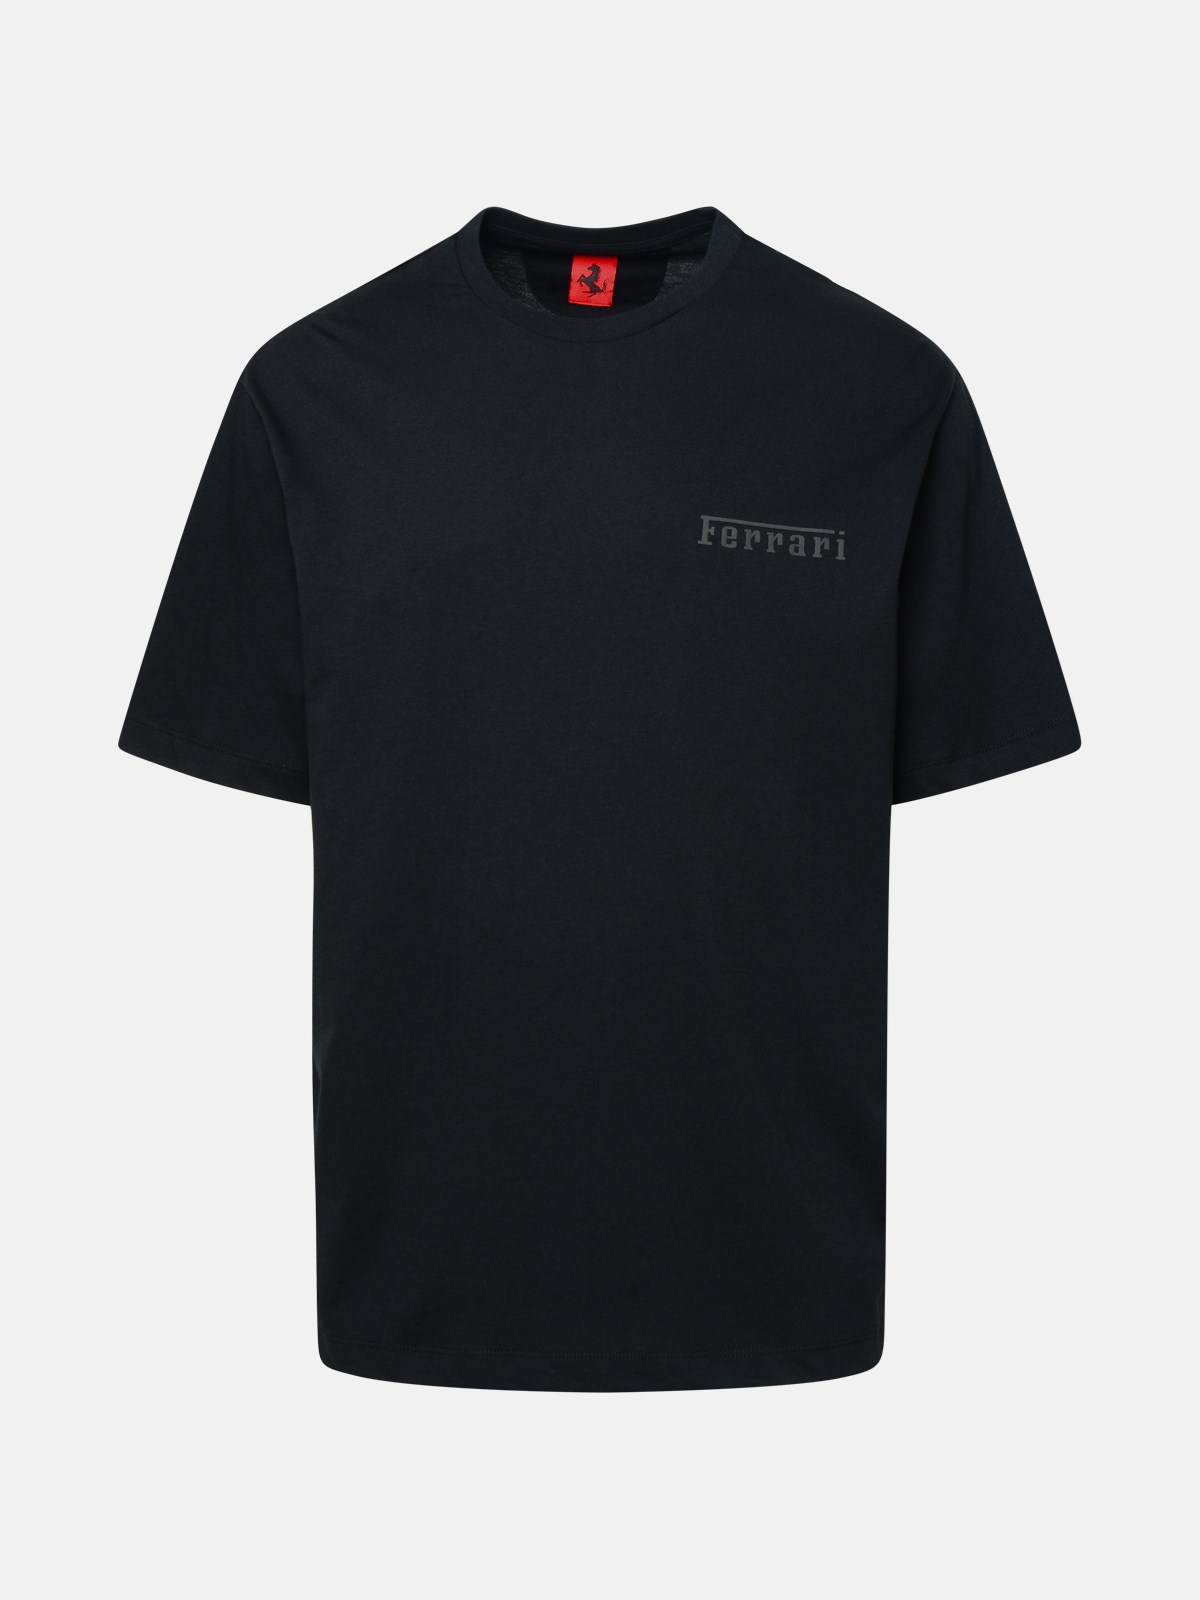 Ferrari T-shirt In Black